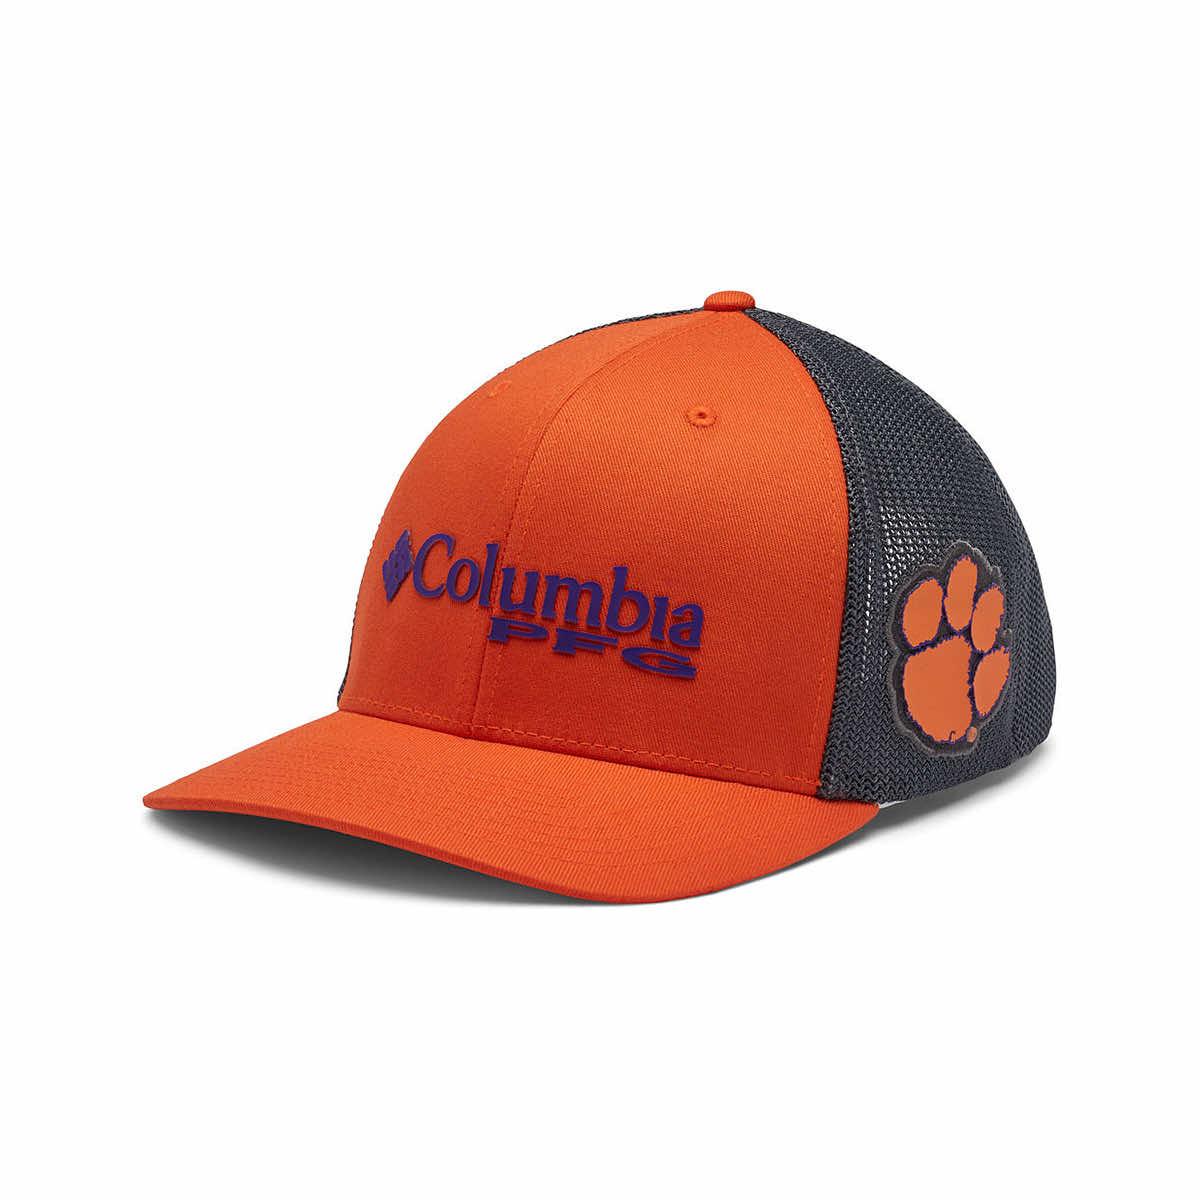 Columbia PFG Mesh Snap Back Ball Cap - Clemson - O/S - Orange